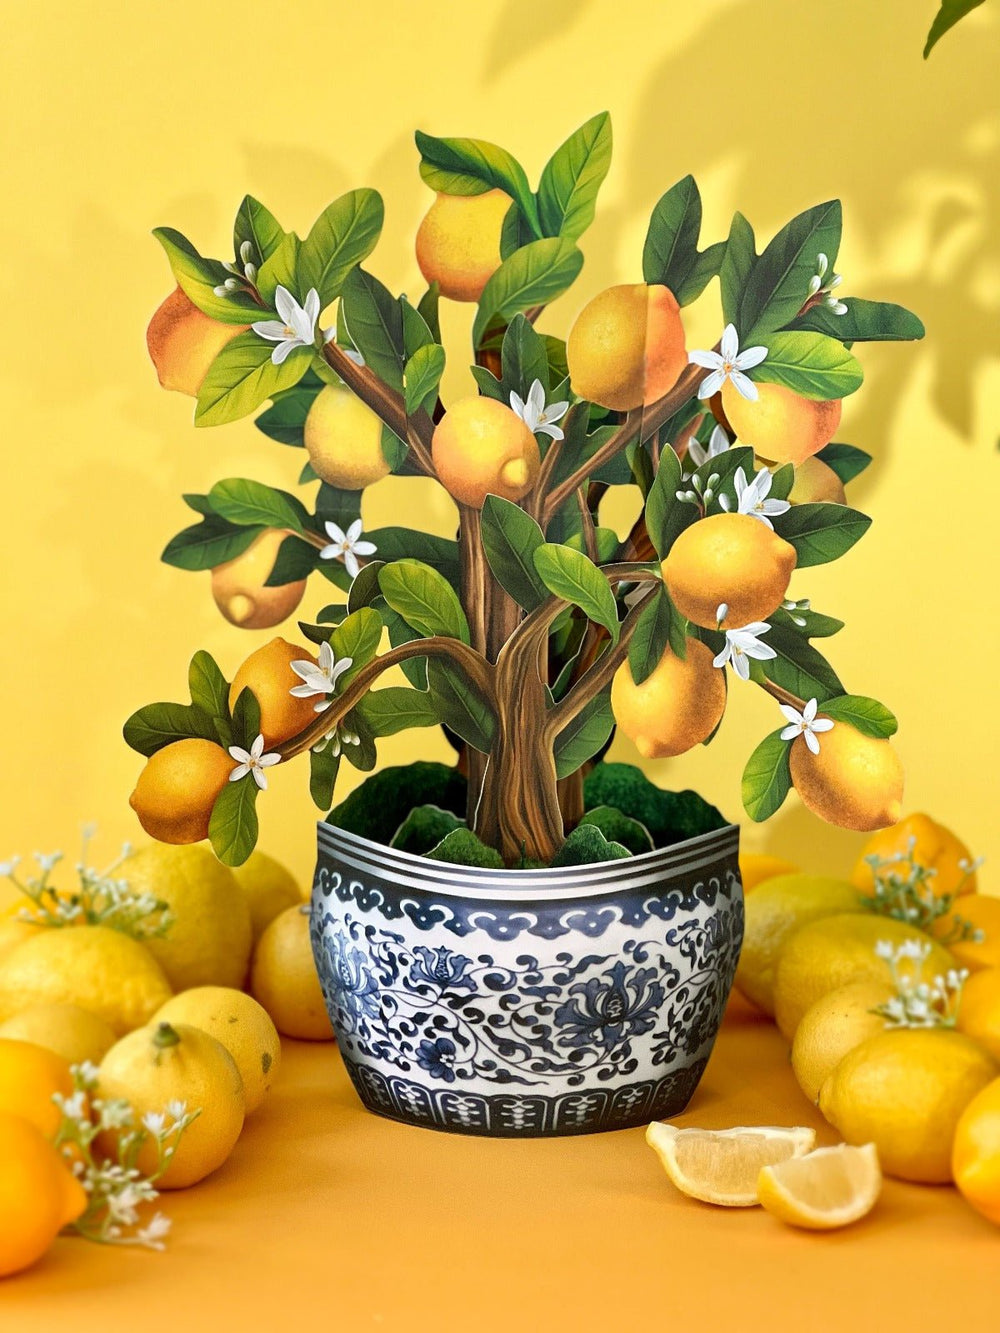 Lemon Blossom Tree - FreshCut Paper